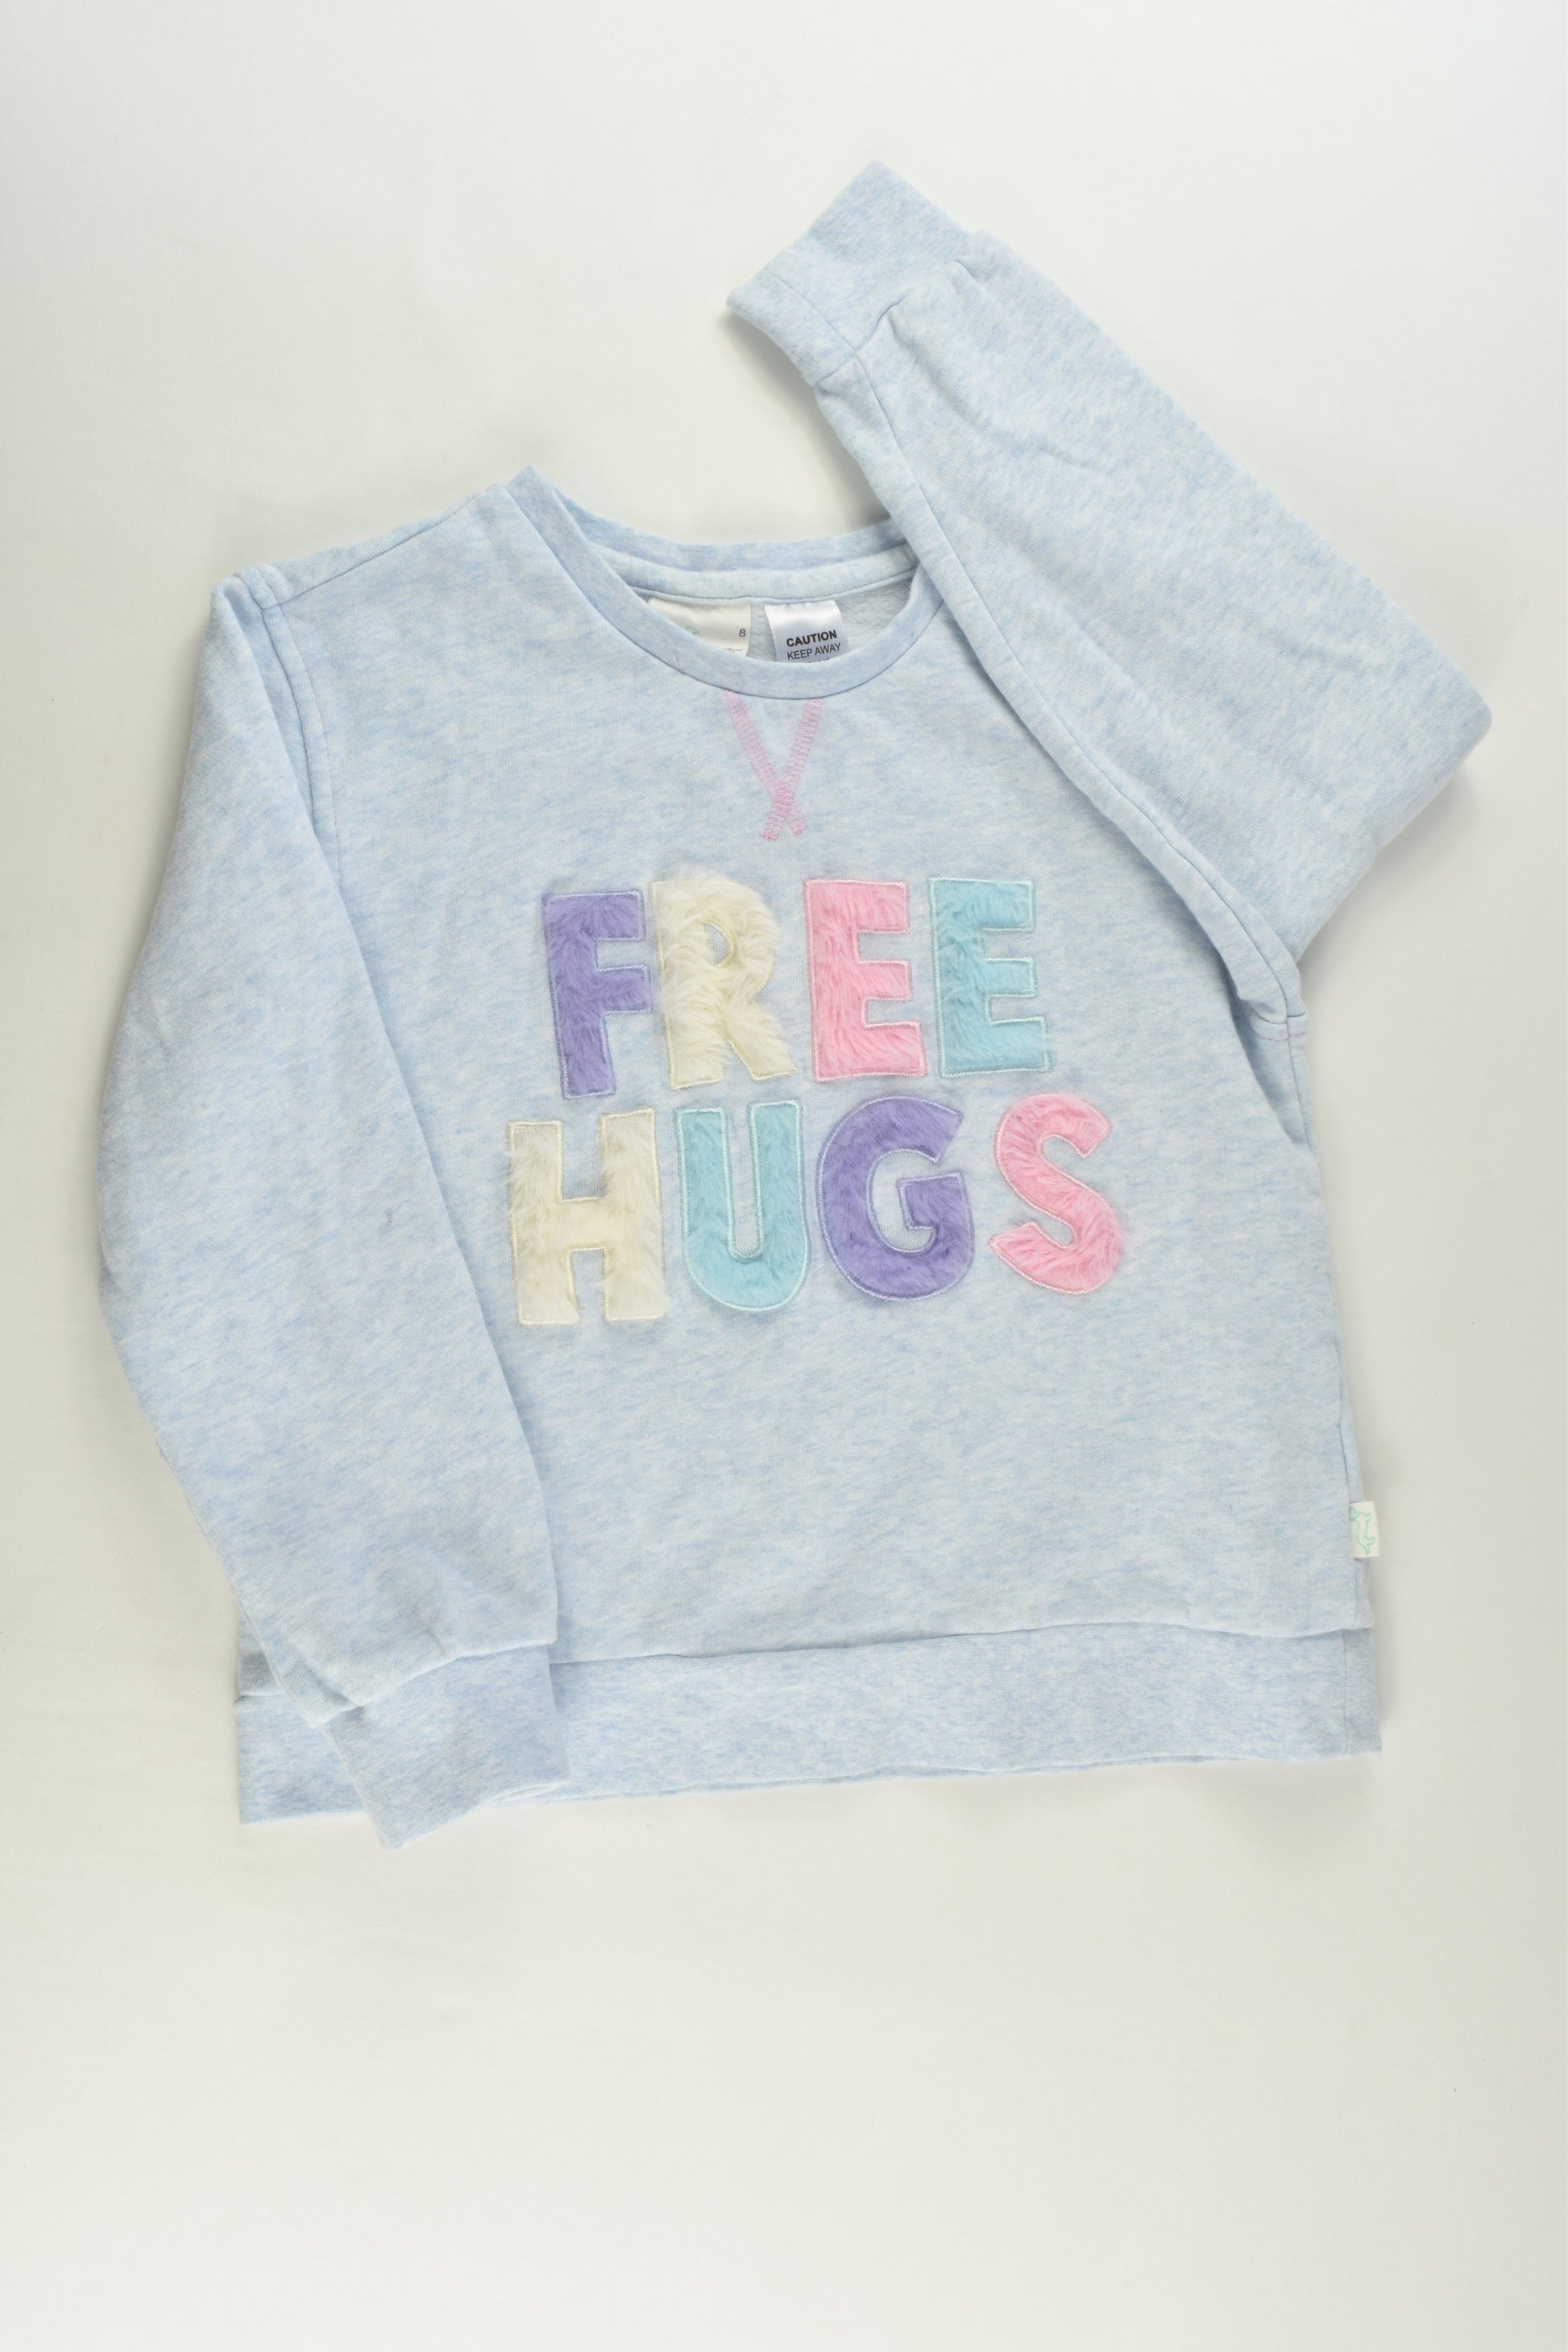 Peter Alexander Size 8 'Free Hugs' Sweater